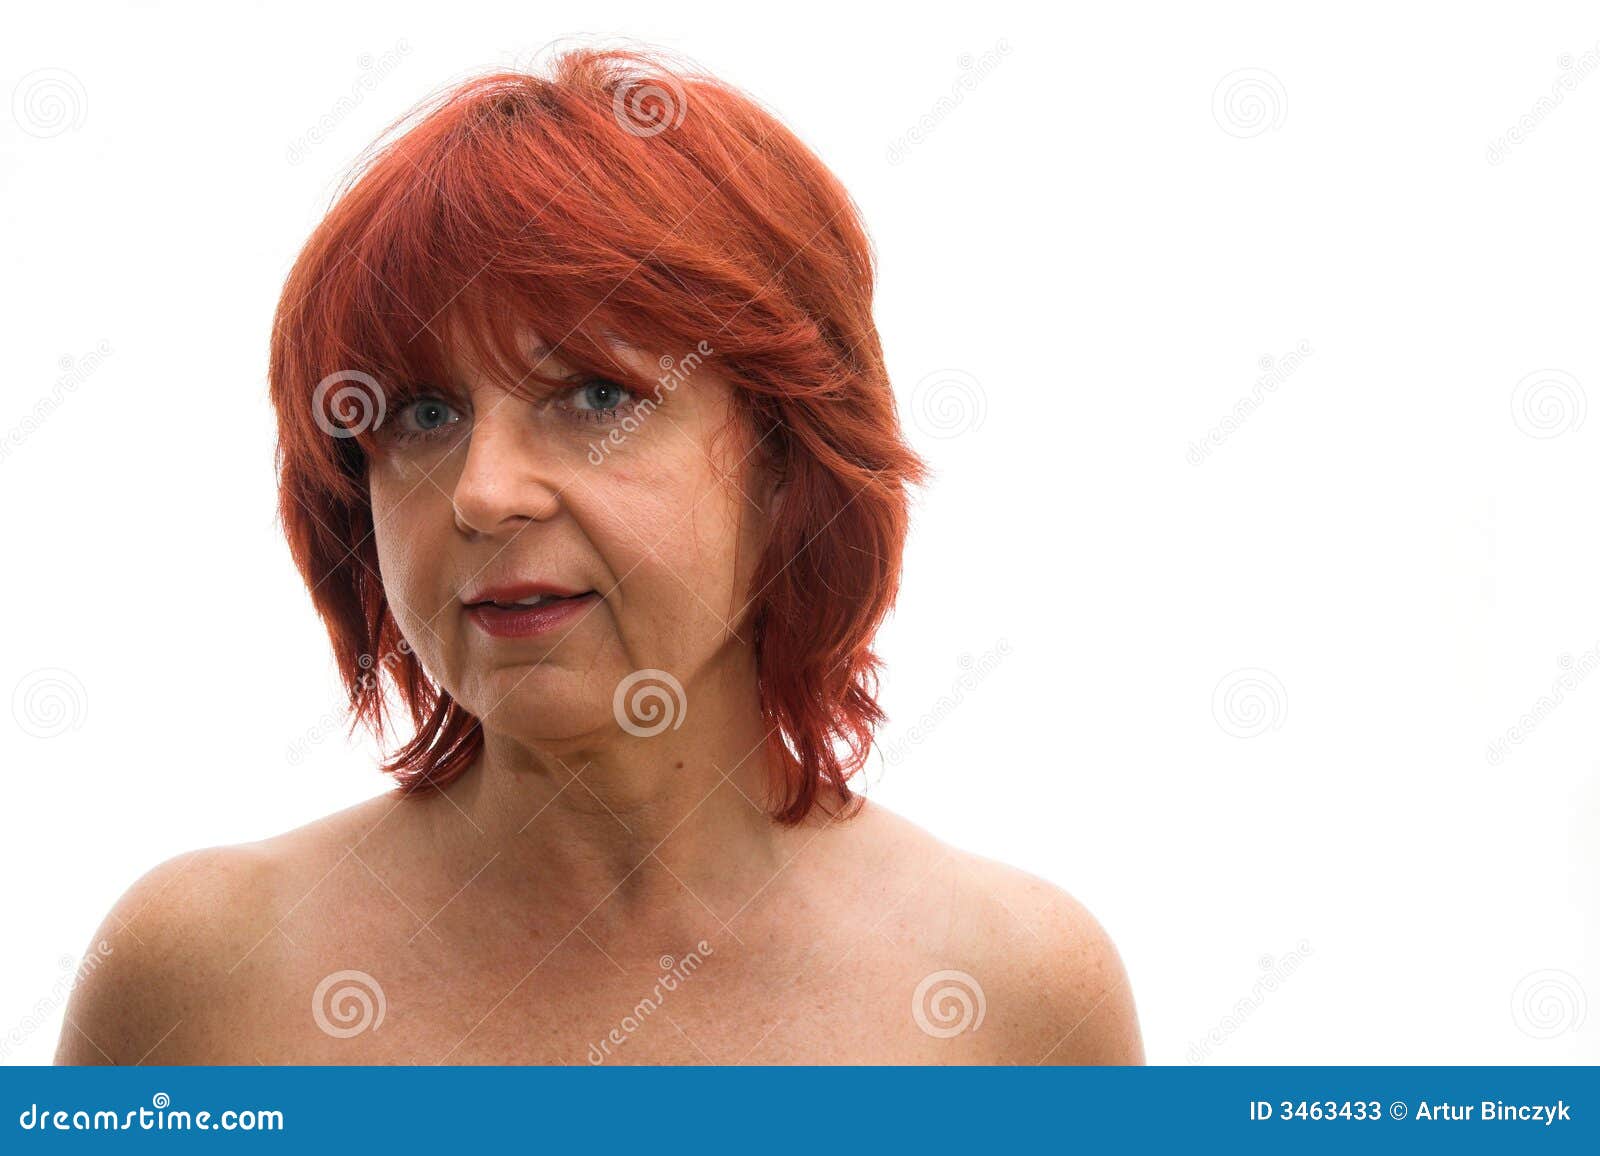 Naked mature women stock photo images. 343 naked mature